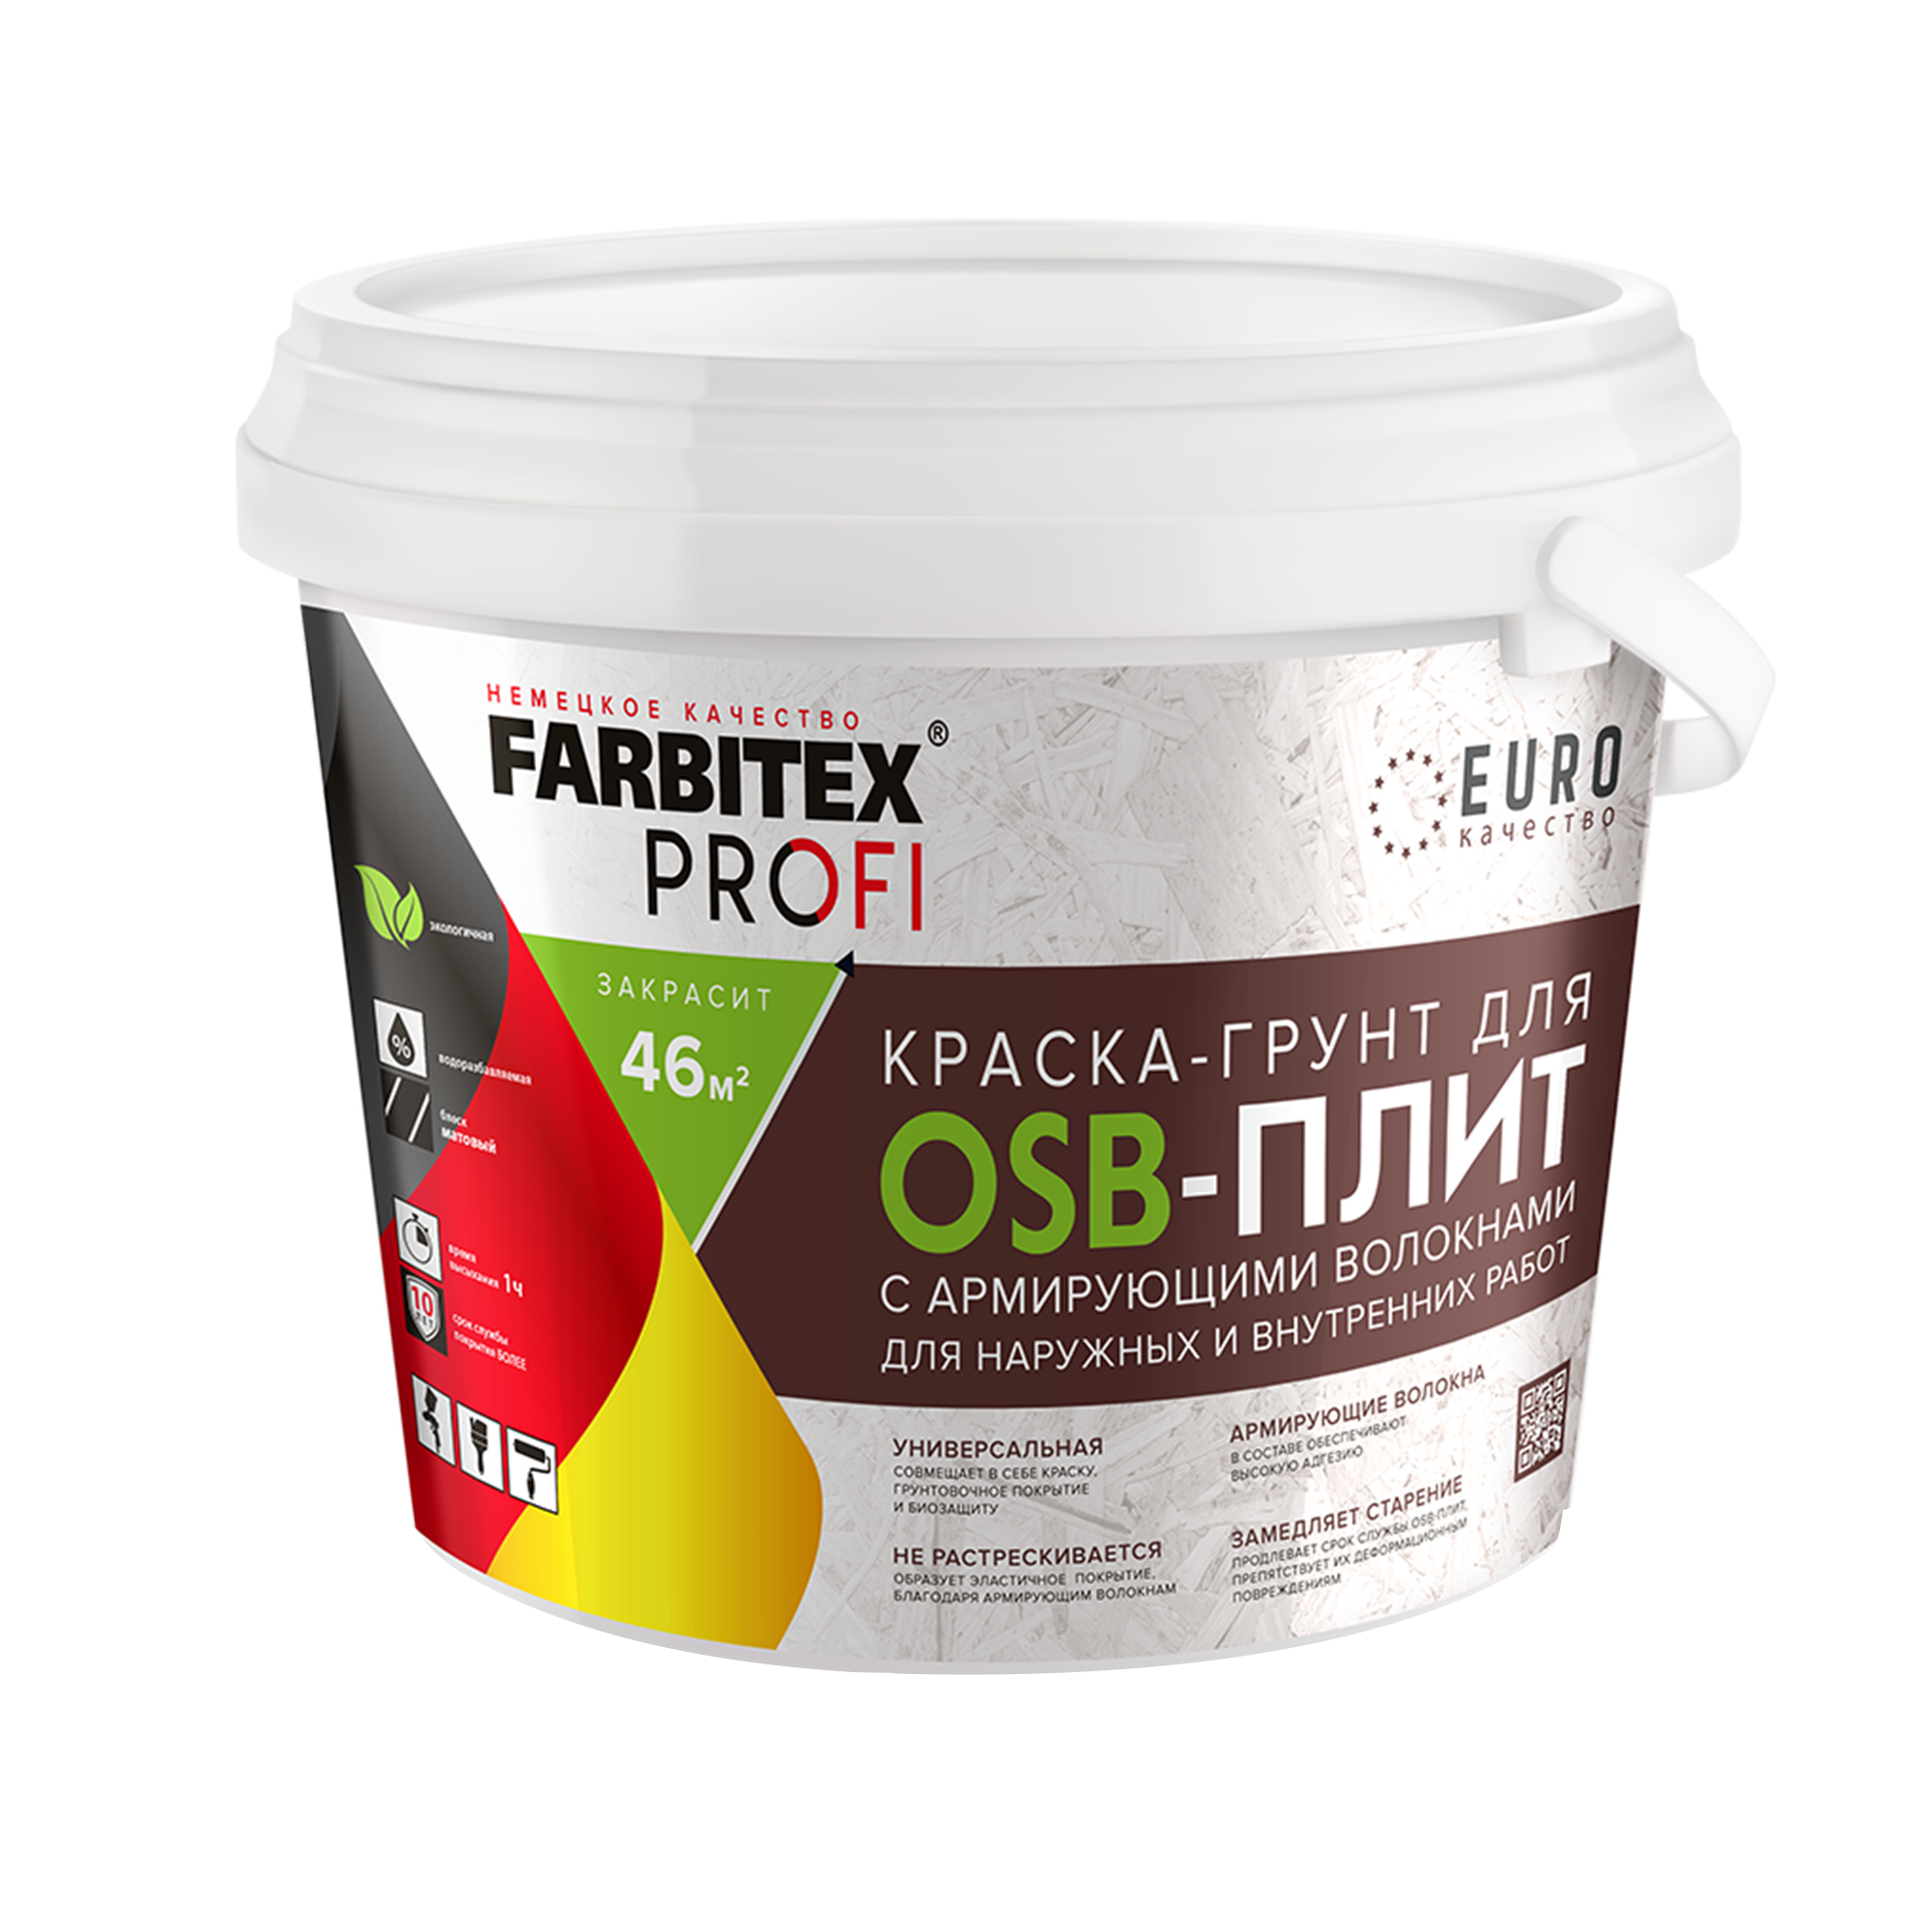 Краска-грунт FARBITEX PROFI Для OSB плит 3в1 армированная 3кг